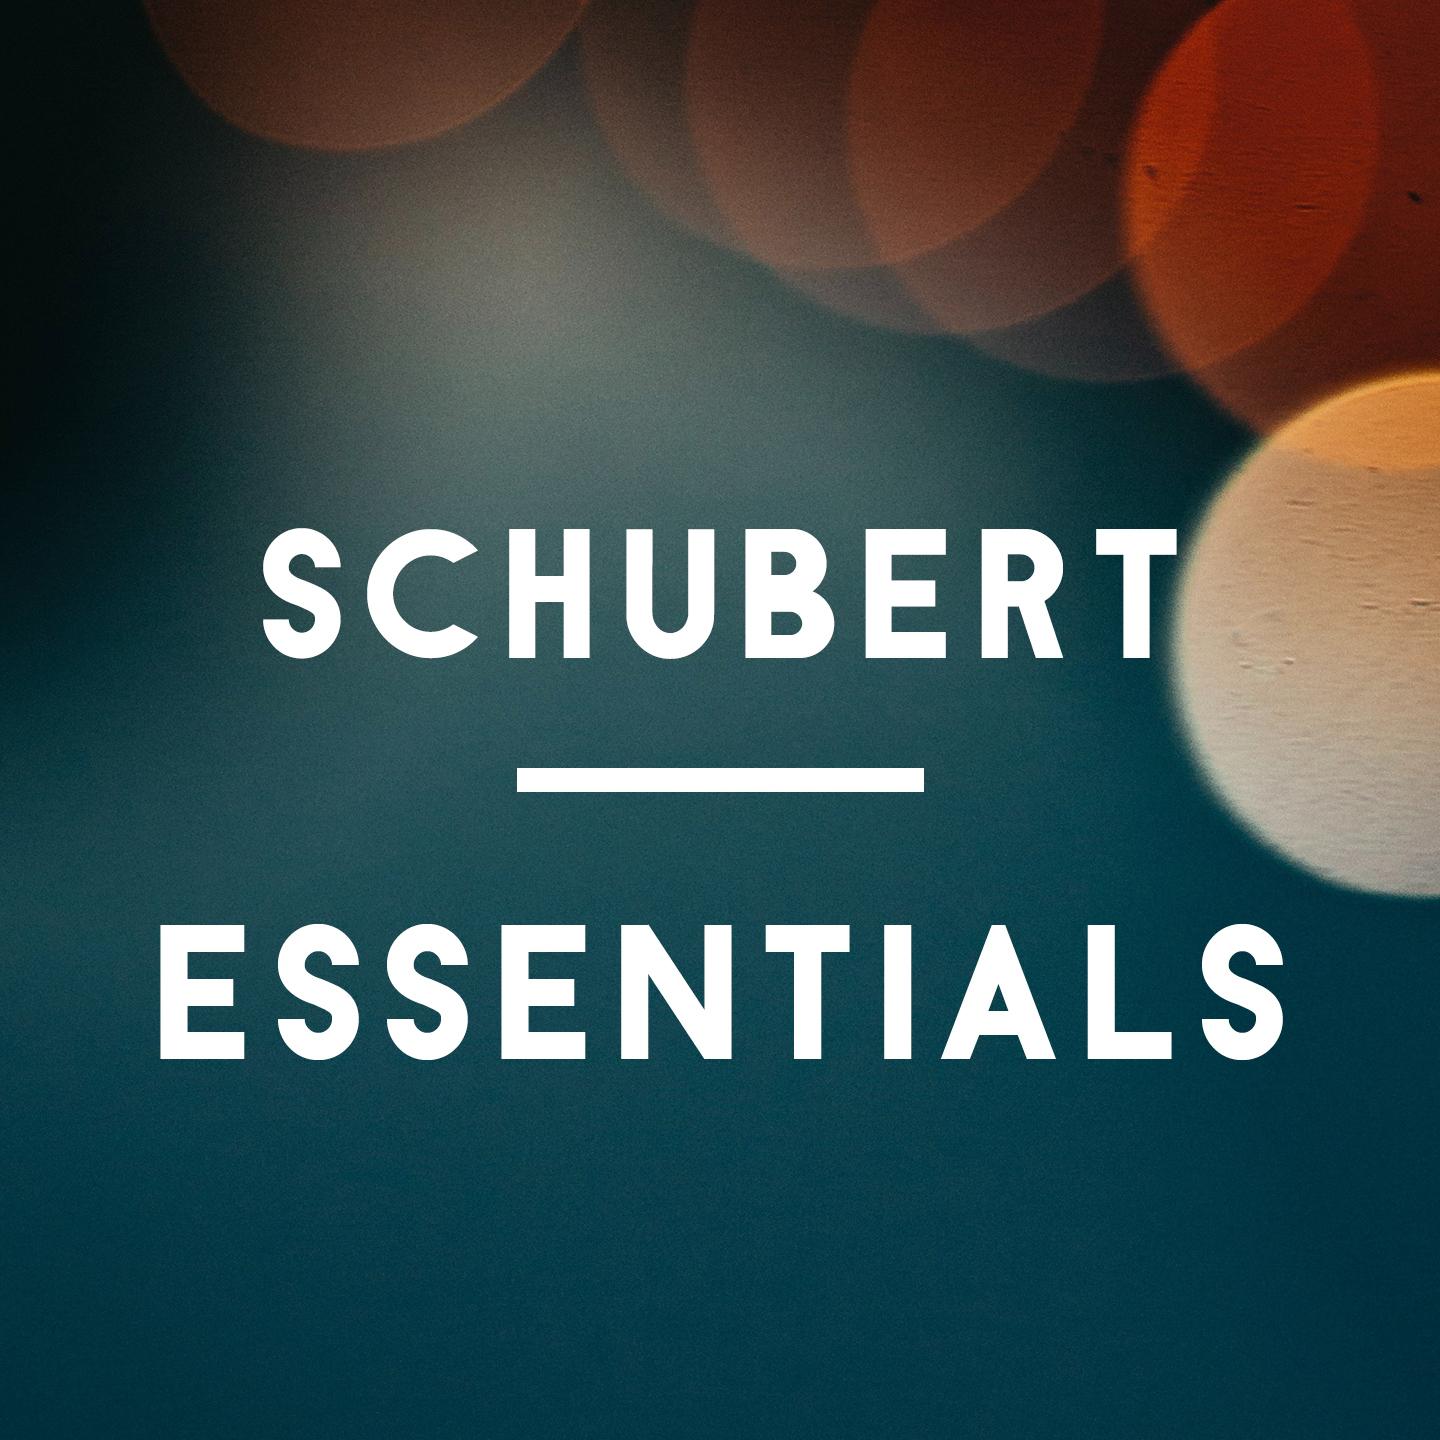 Schubert essentials